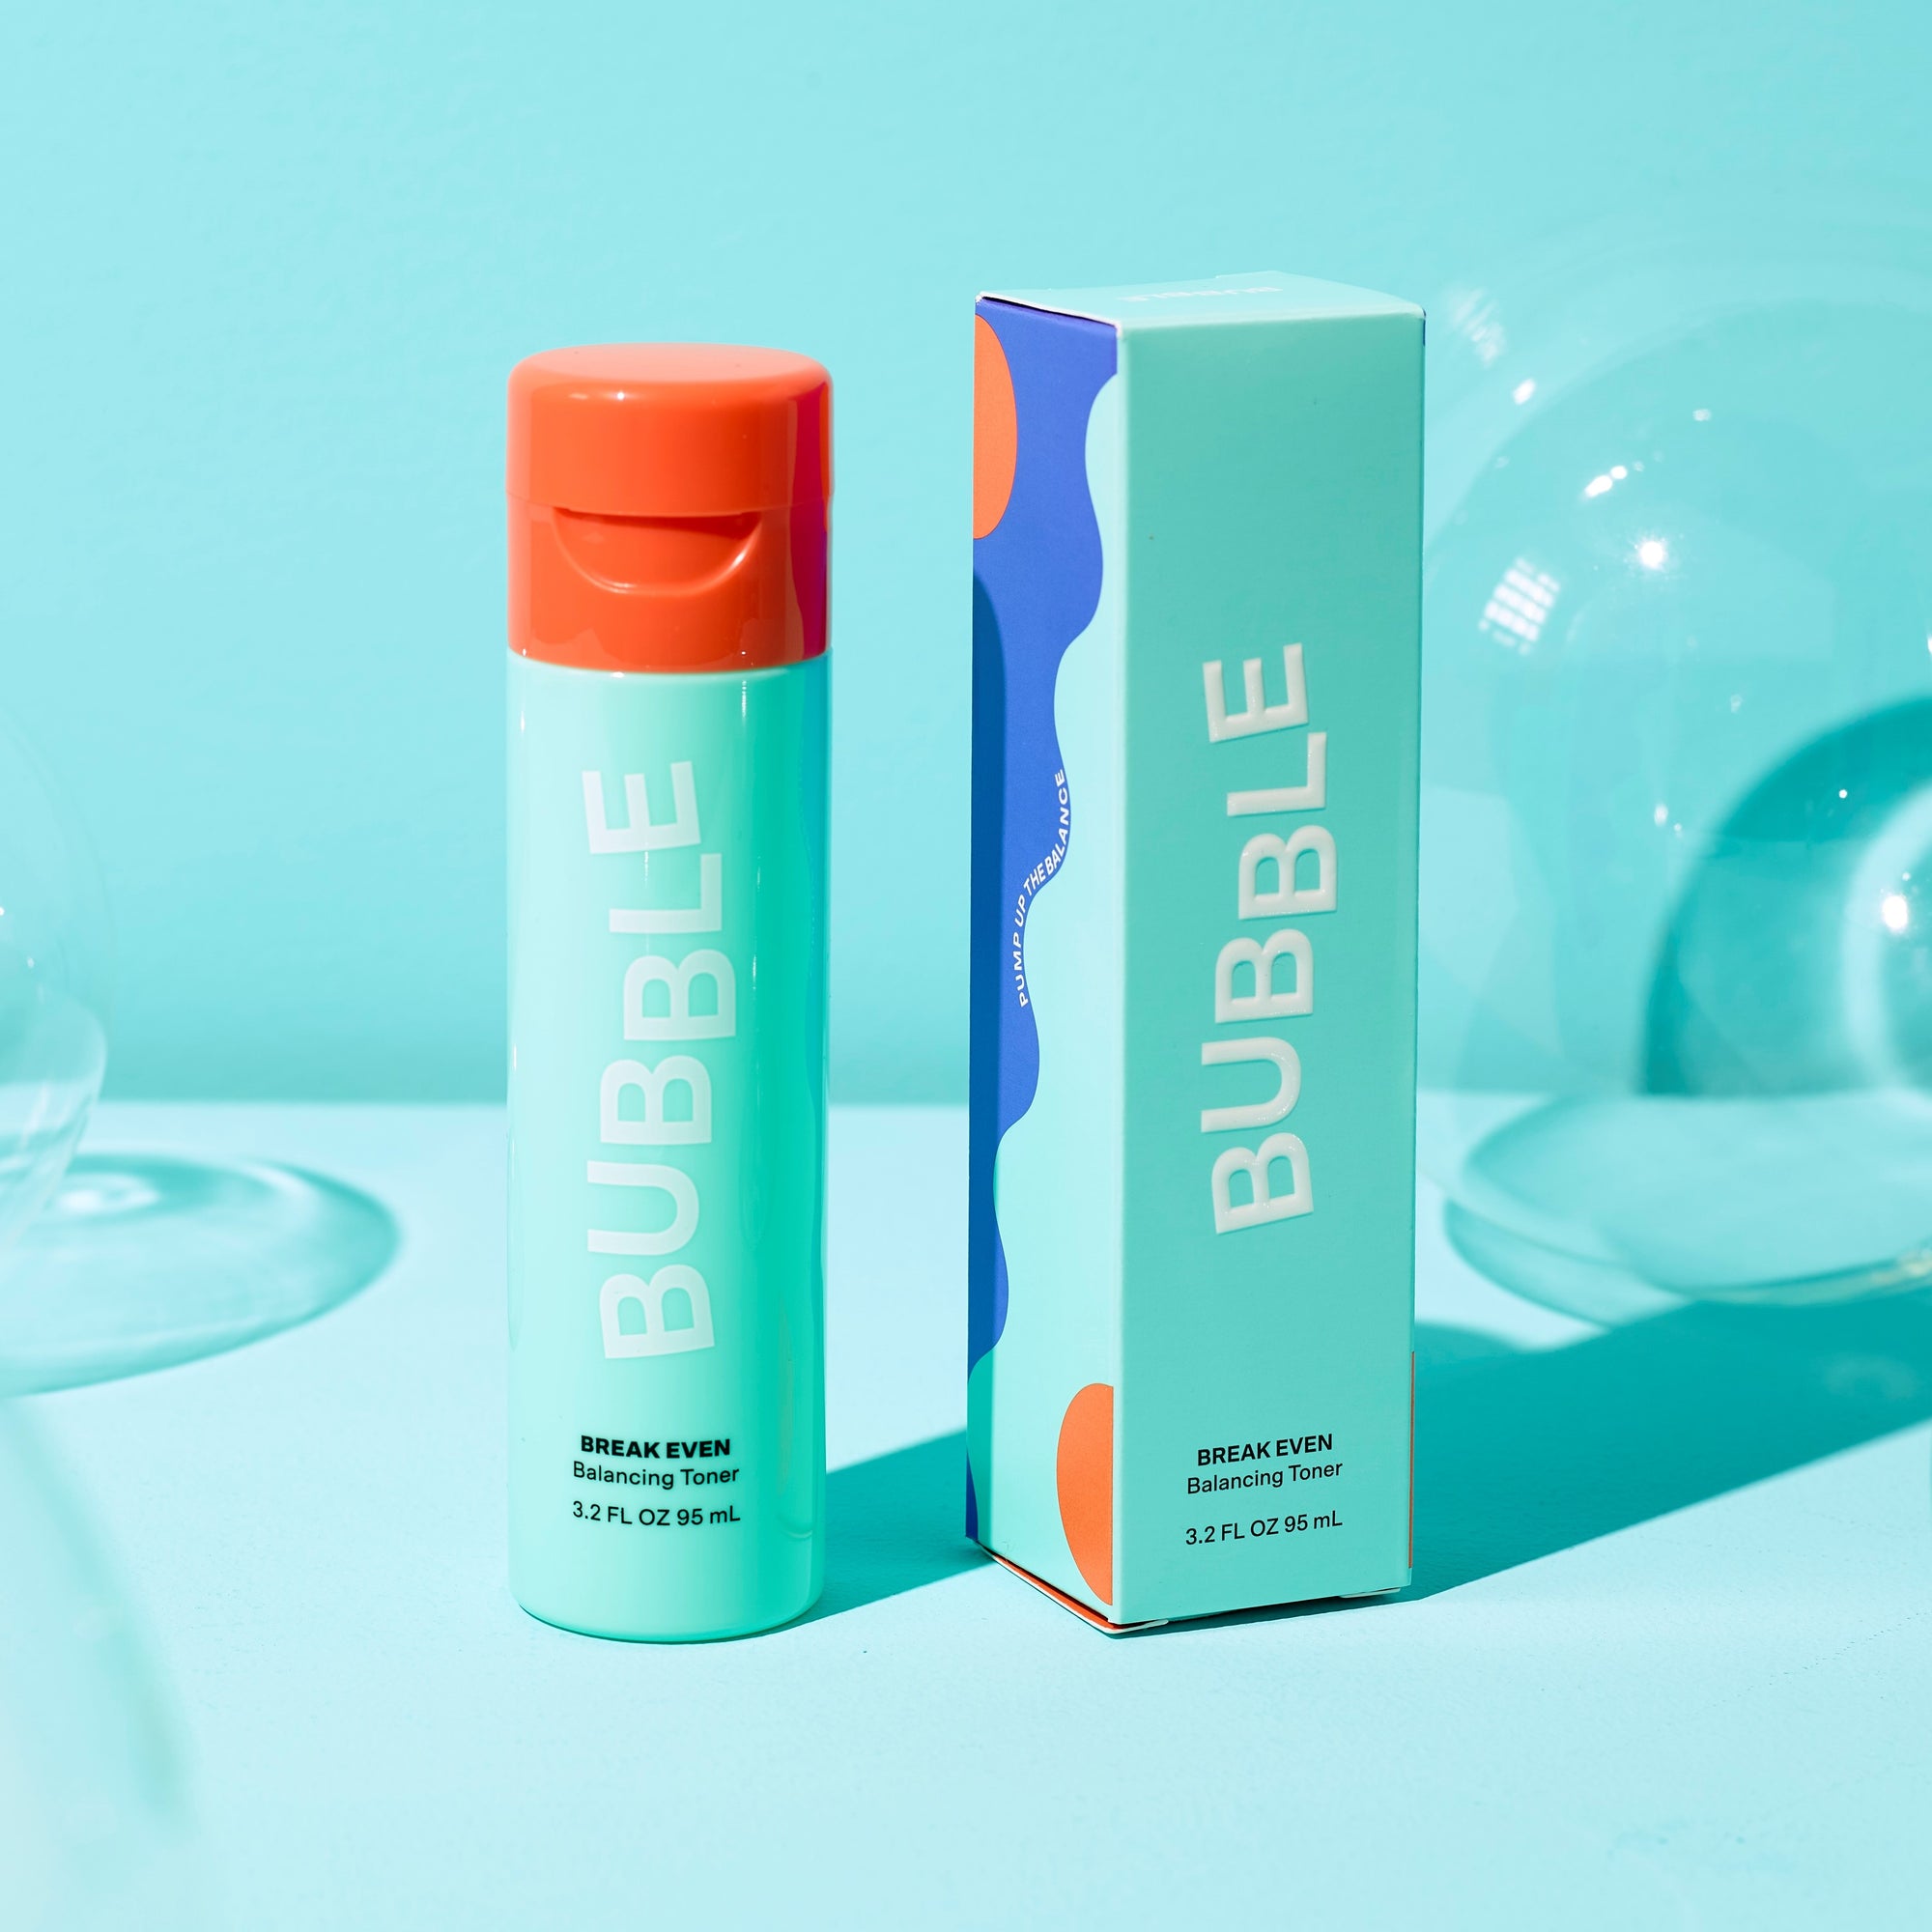 Product Review  Bubble Skincare Bounce Back Skin Toner